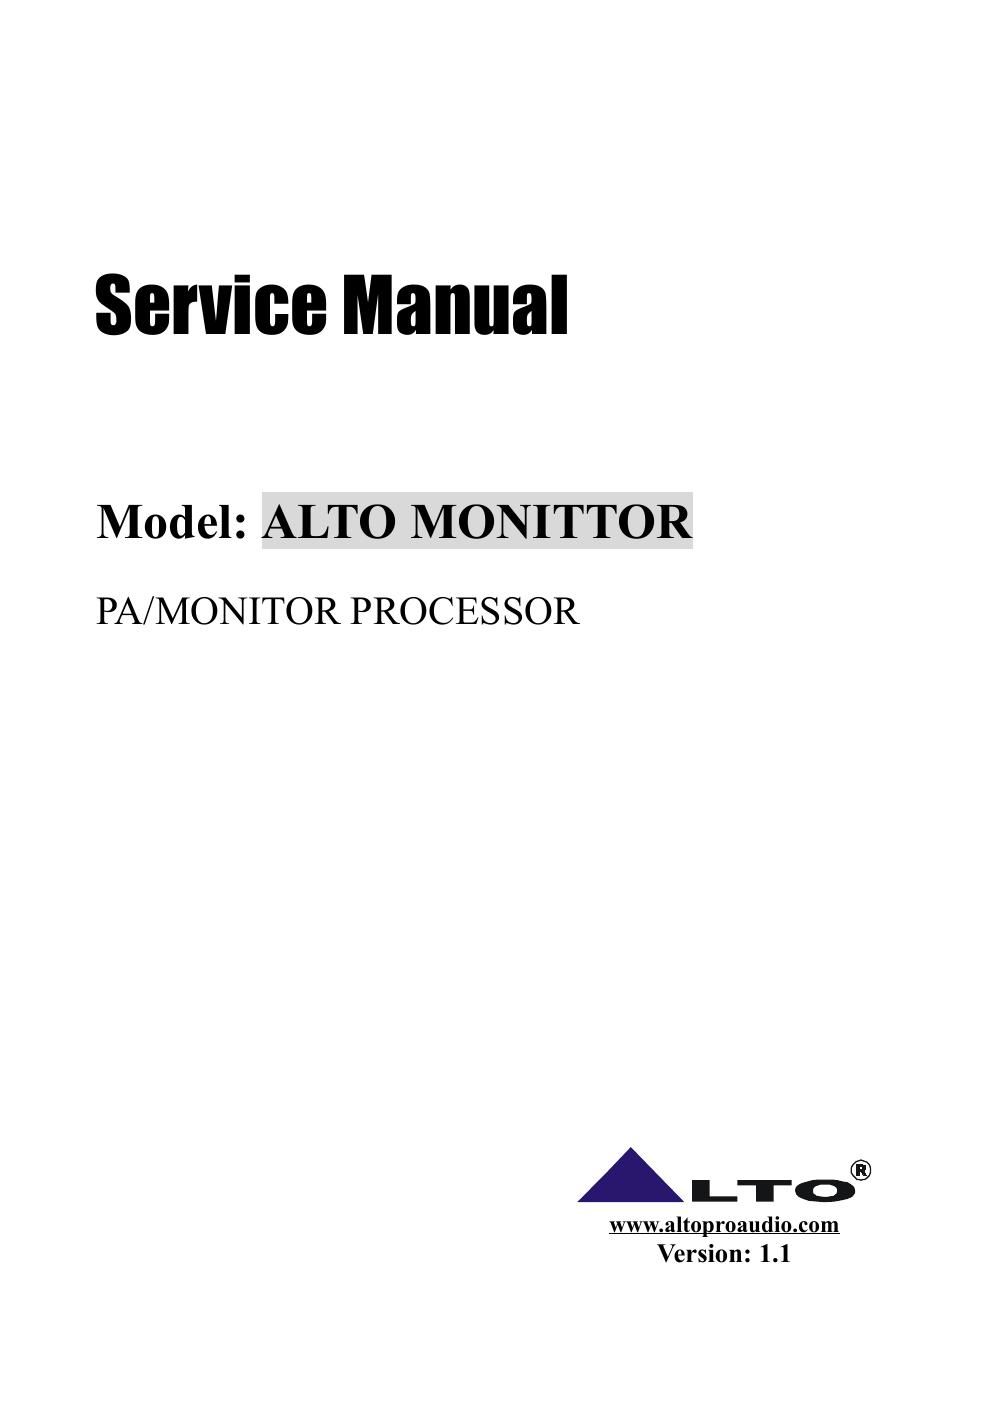 alto monittor service manual